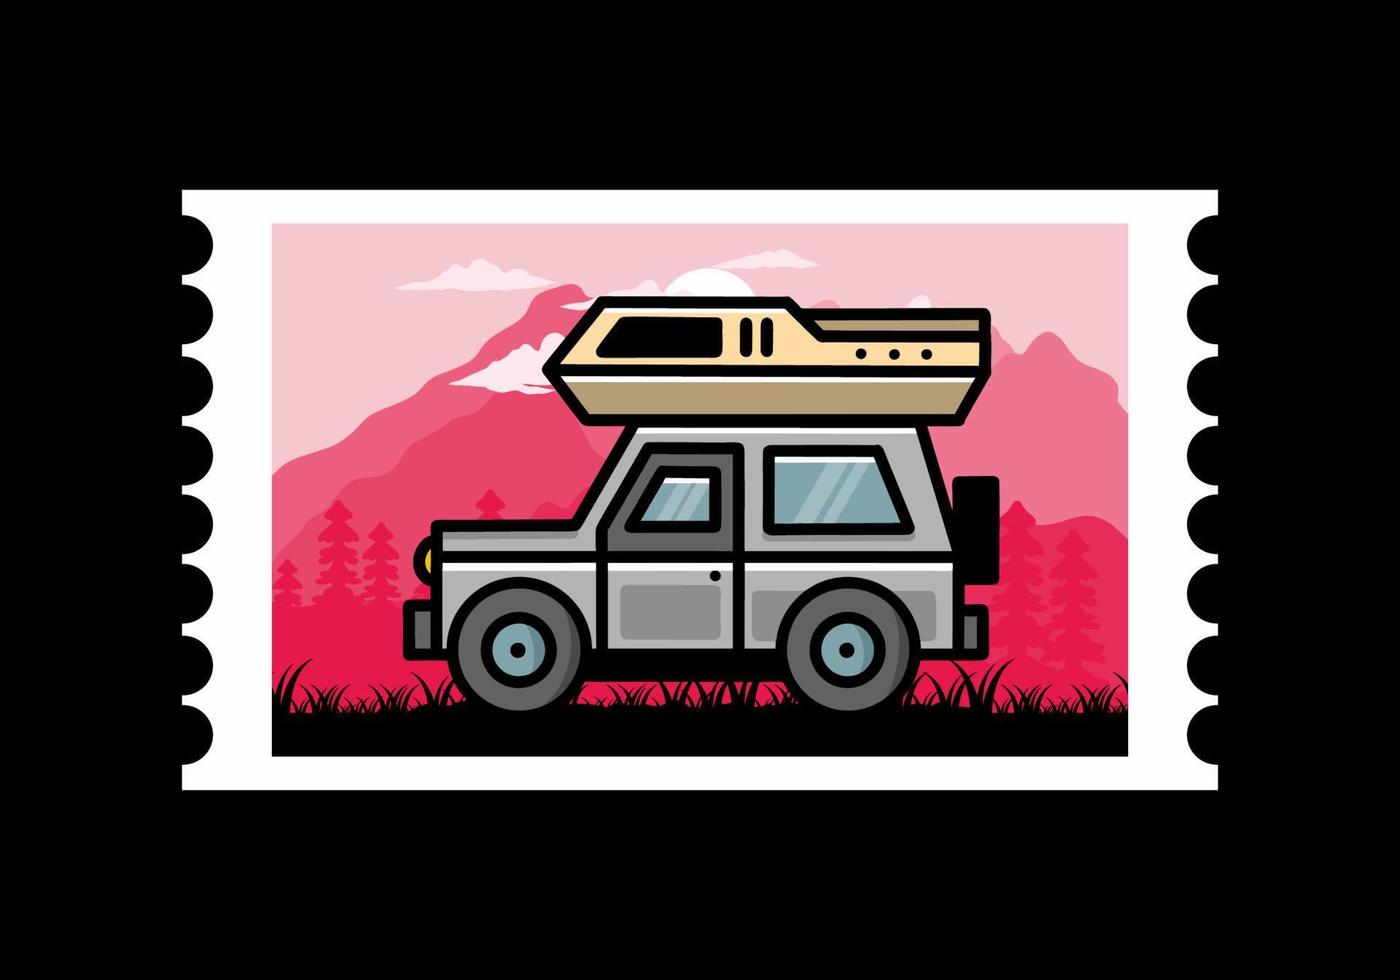 Off road vehicle car camping illustration badge design vector